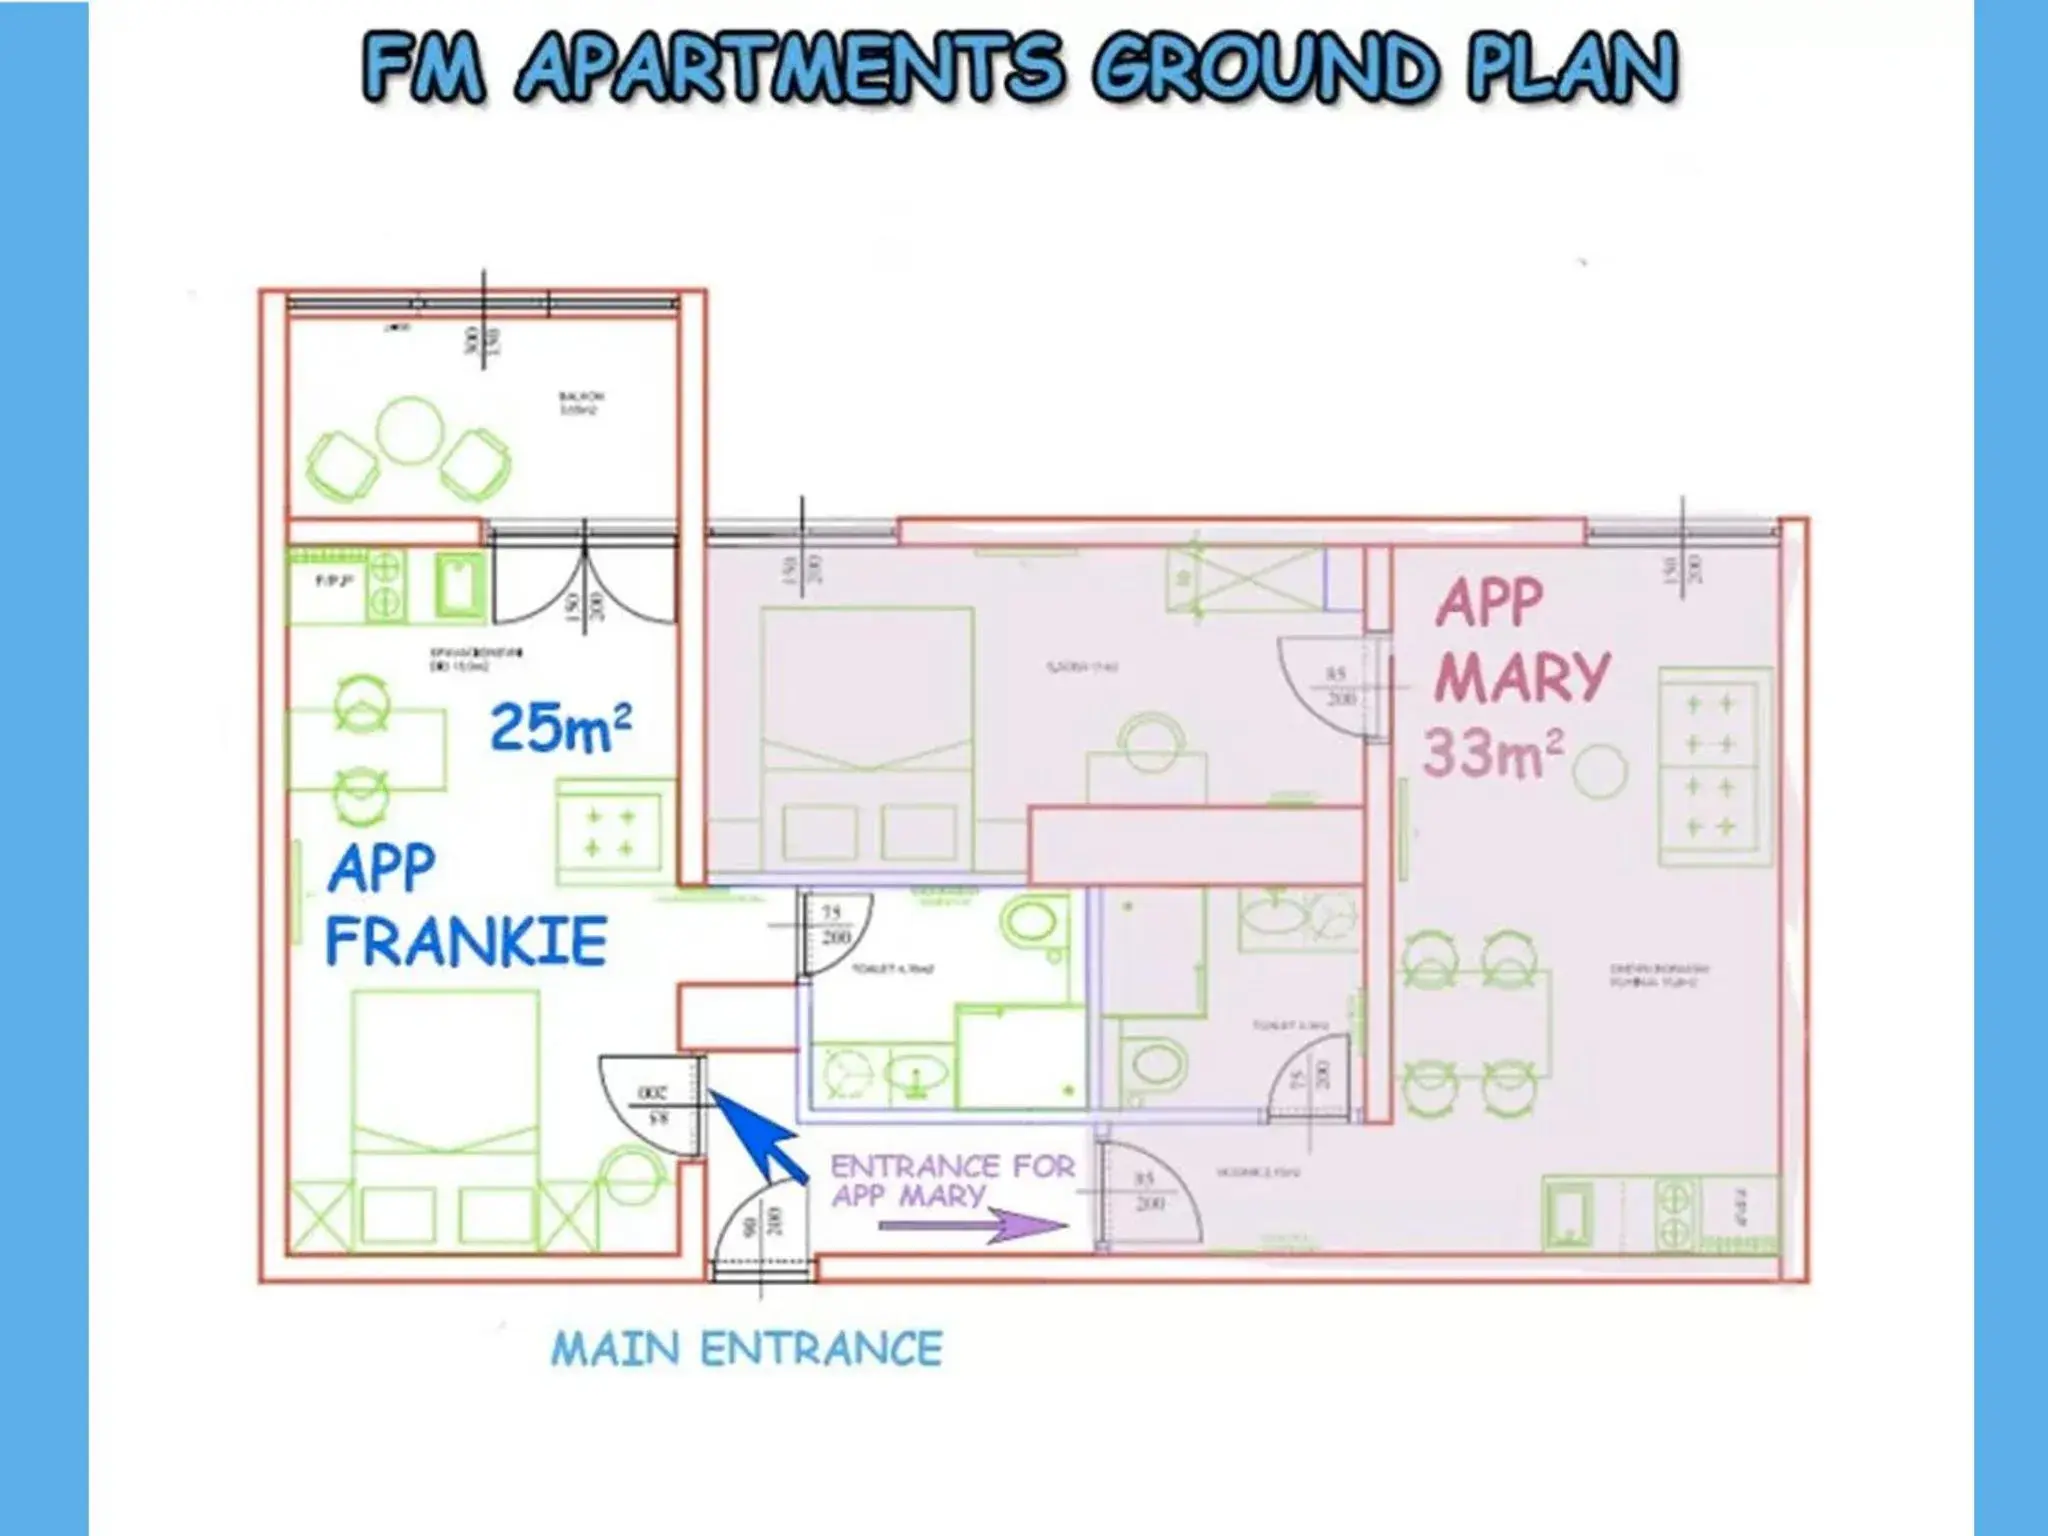 On site, Floor Plan in FM Apartments